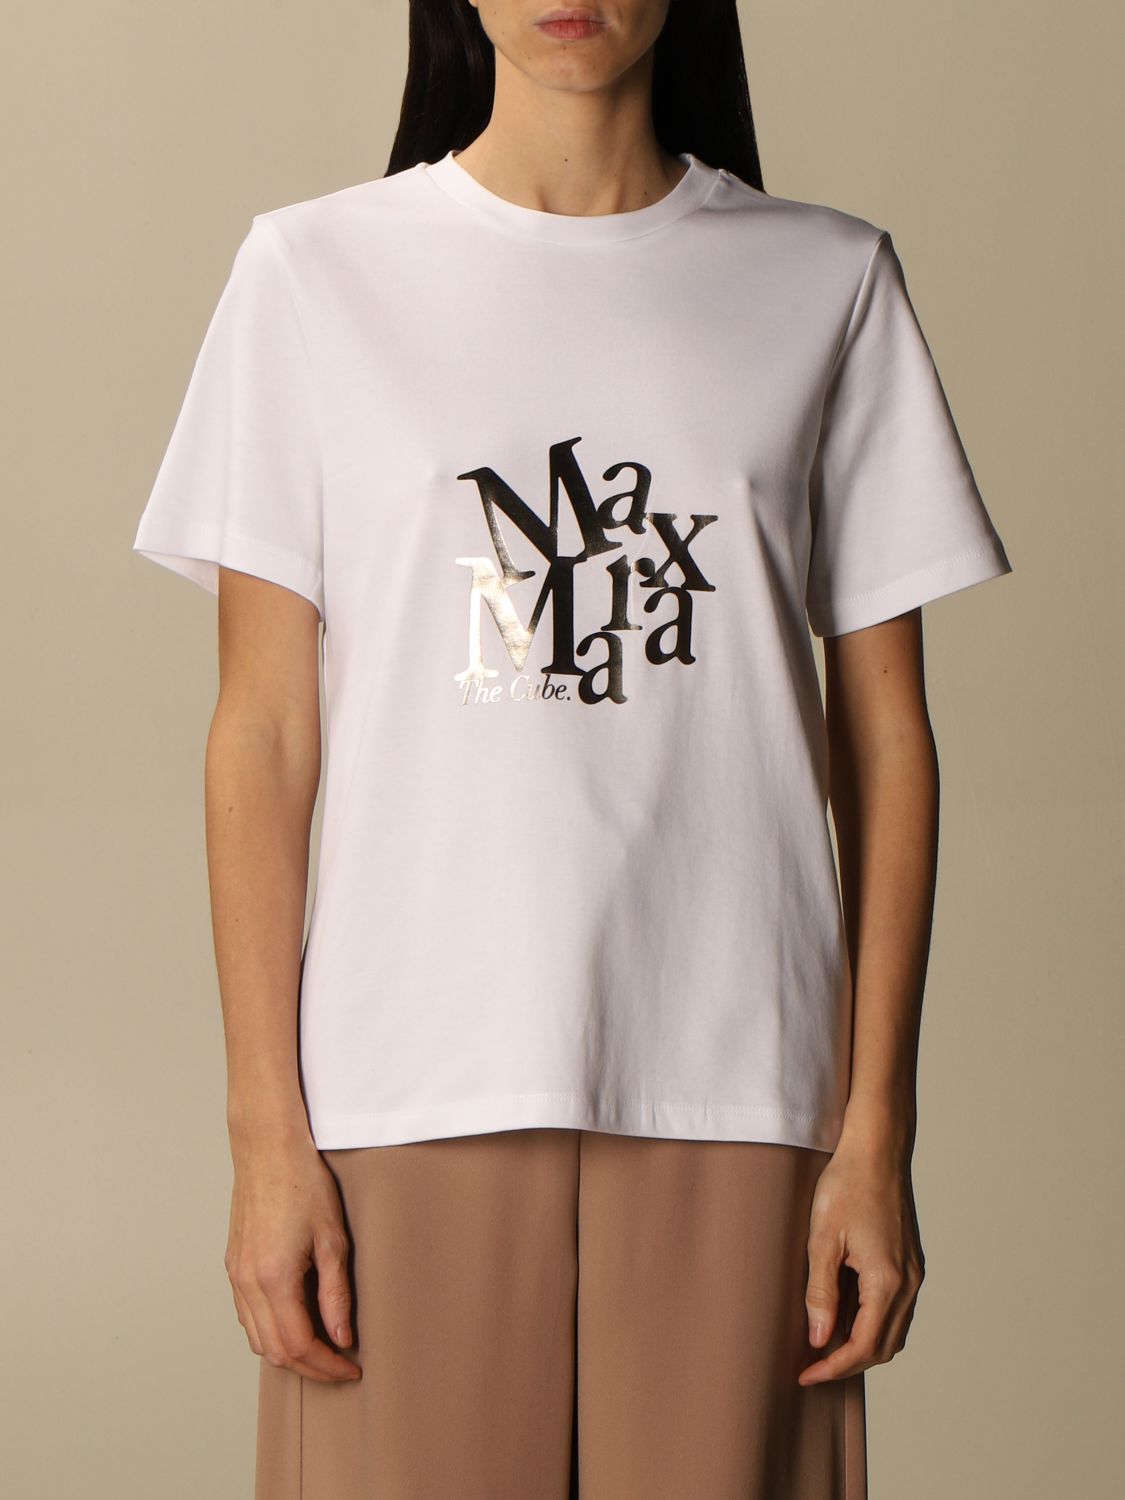 S MAX MARA: Saletta t-shirt in cotton with logo - White | S Max Mara t